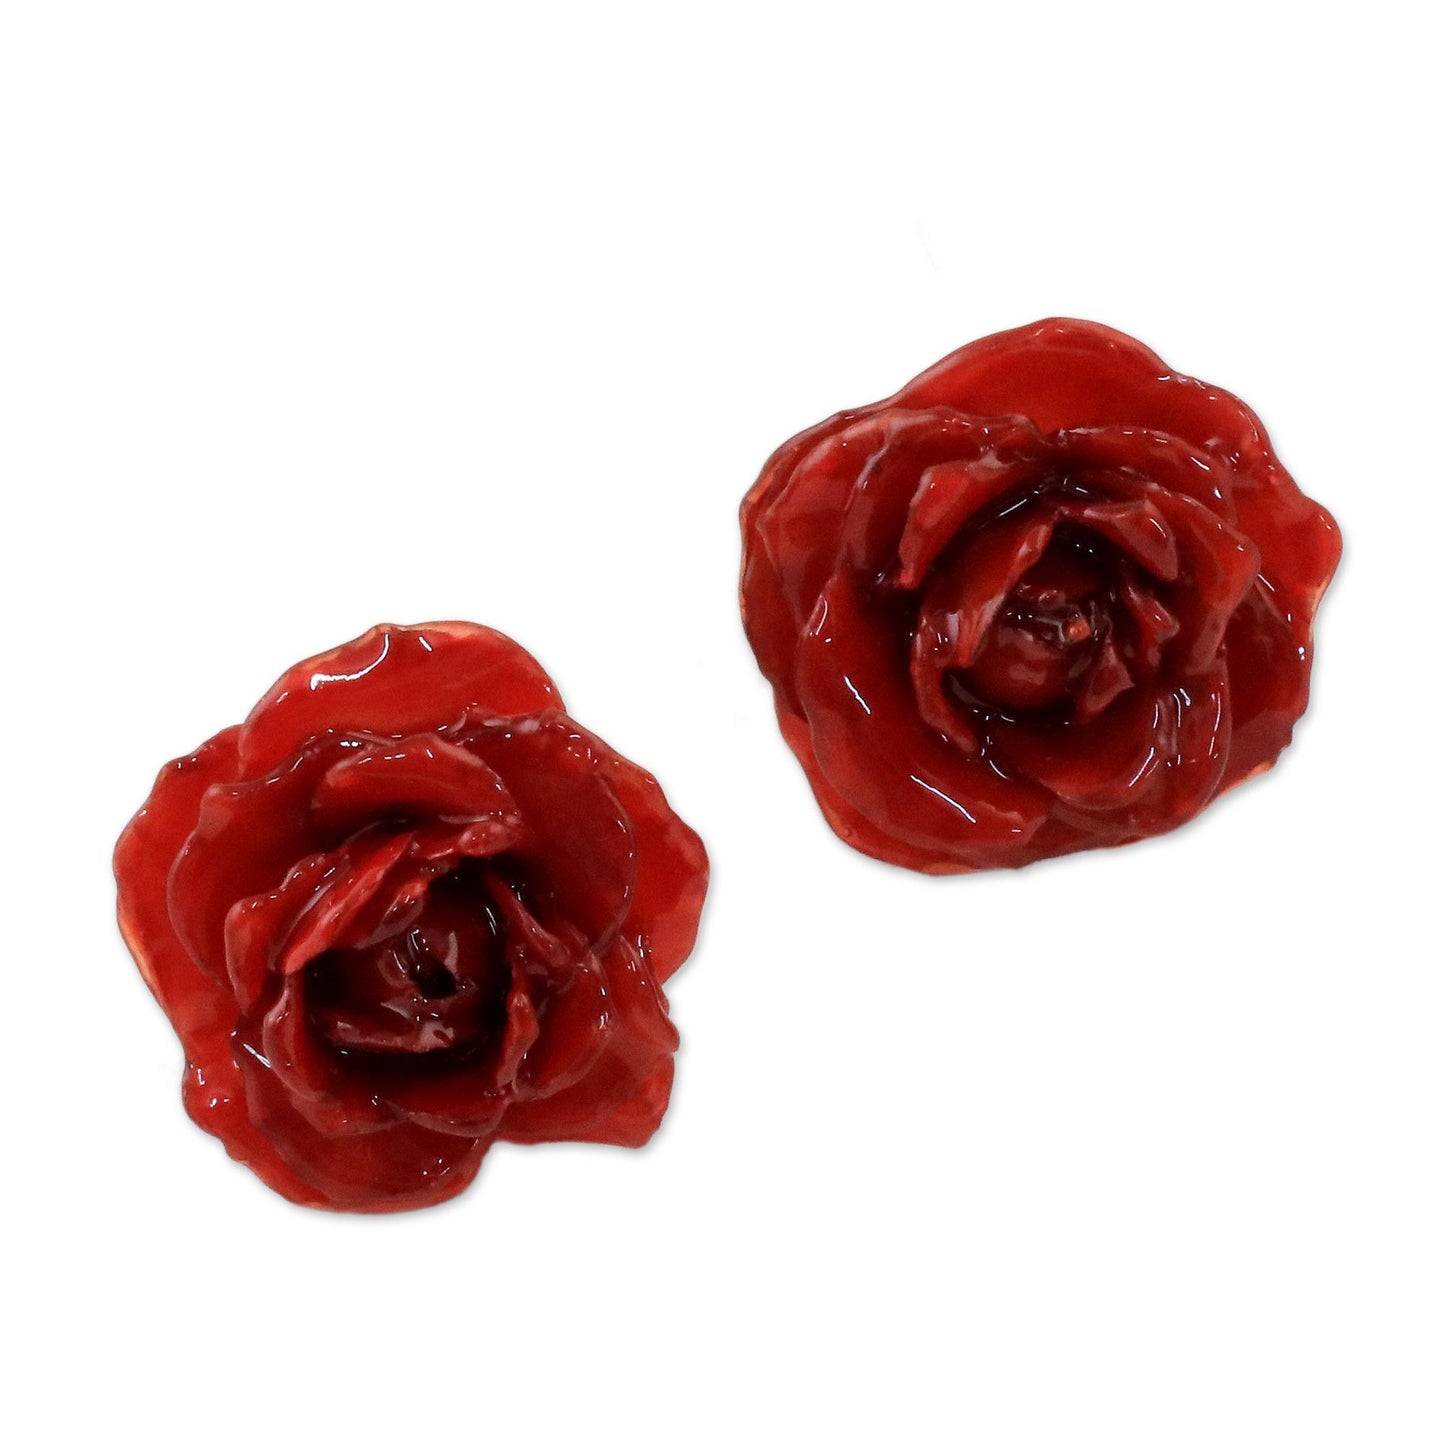 Flowering Passion in Red Stainless Resin Flower Earrings